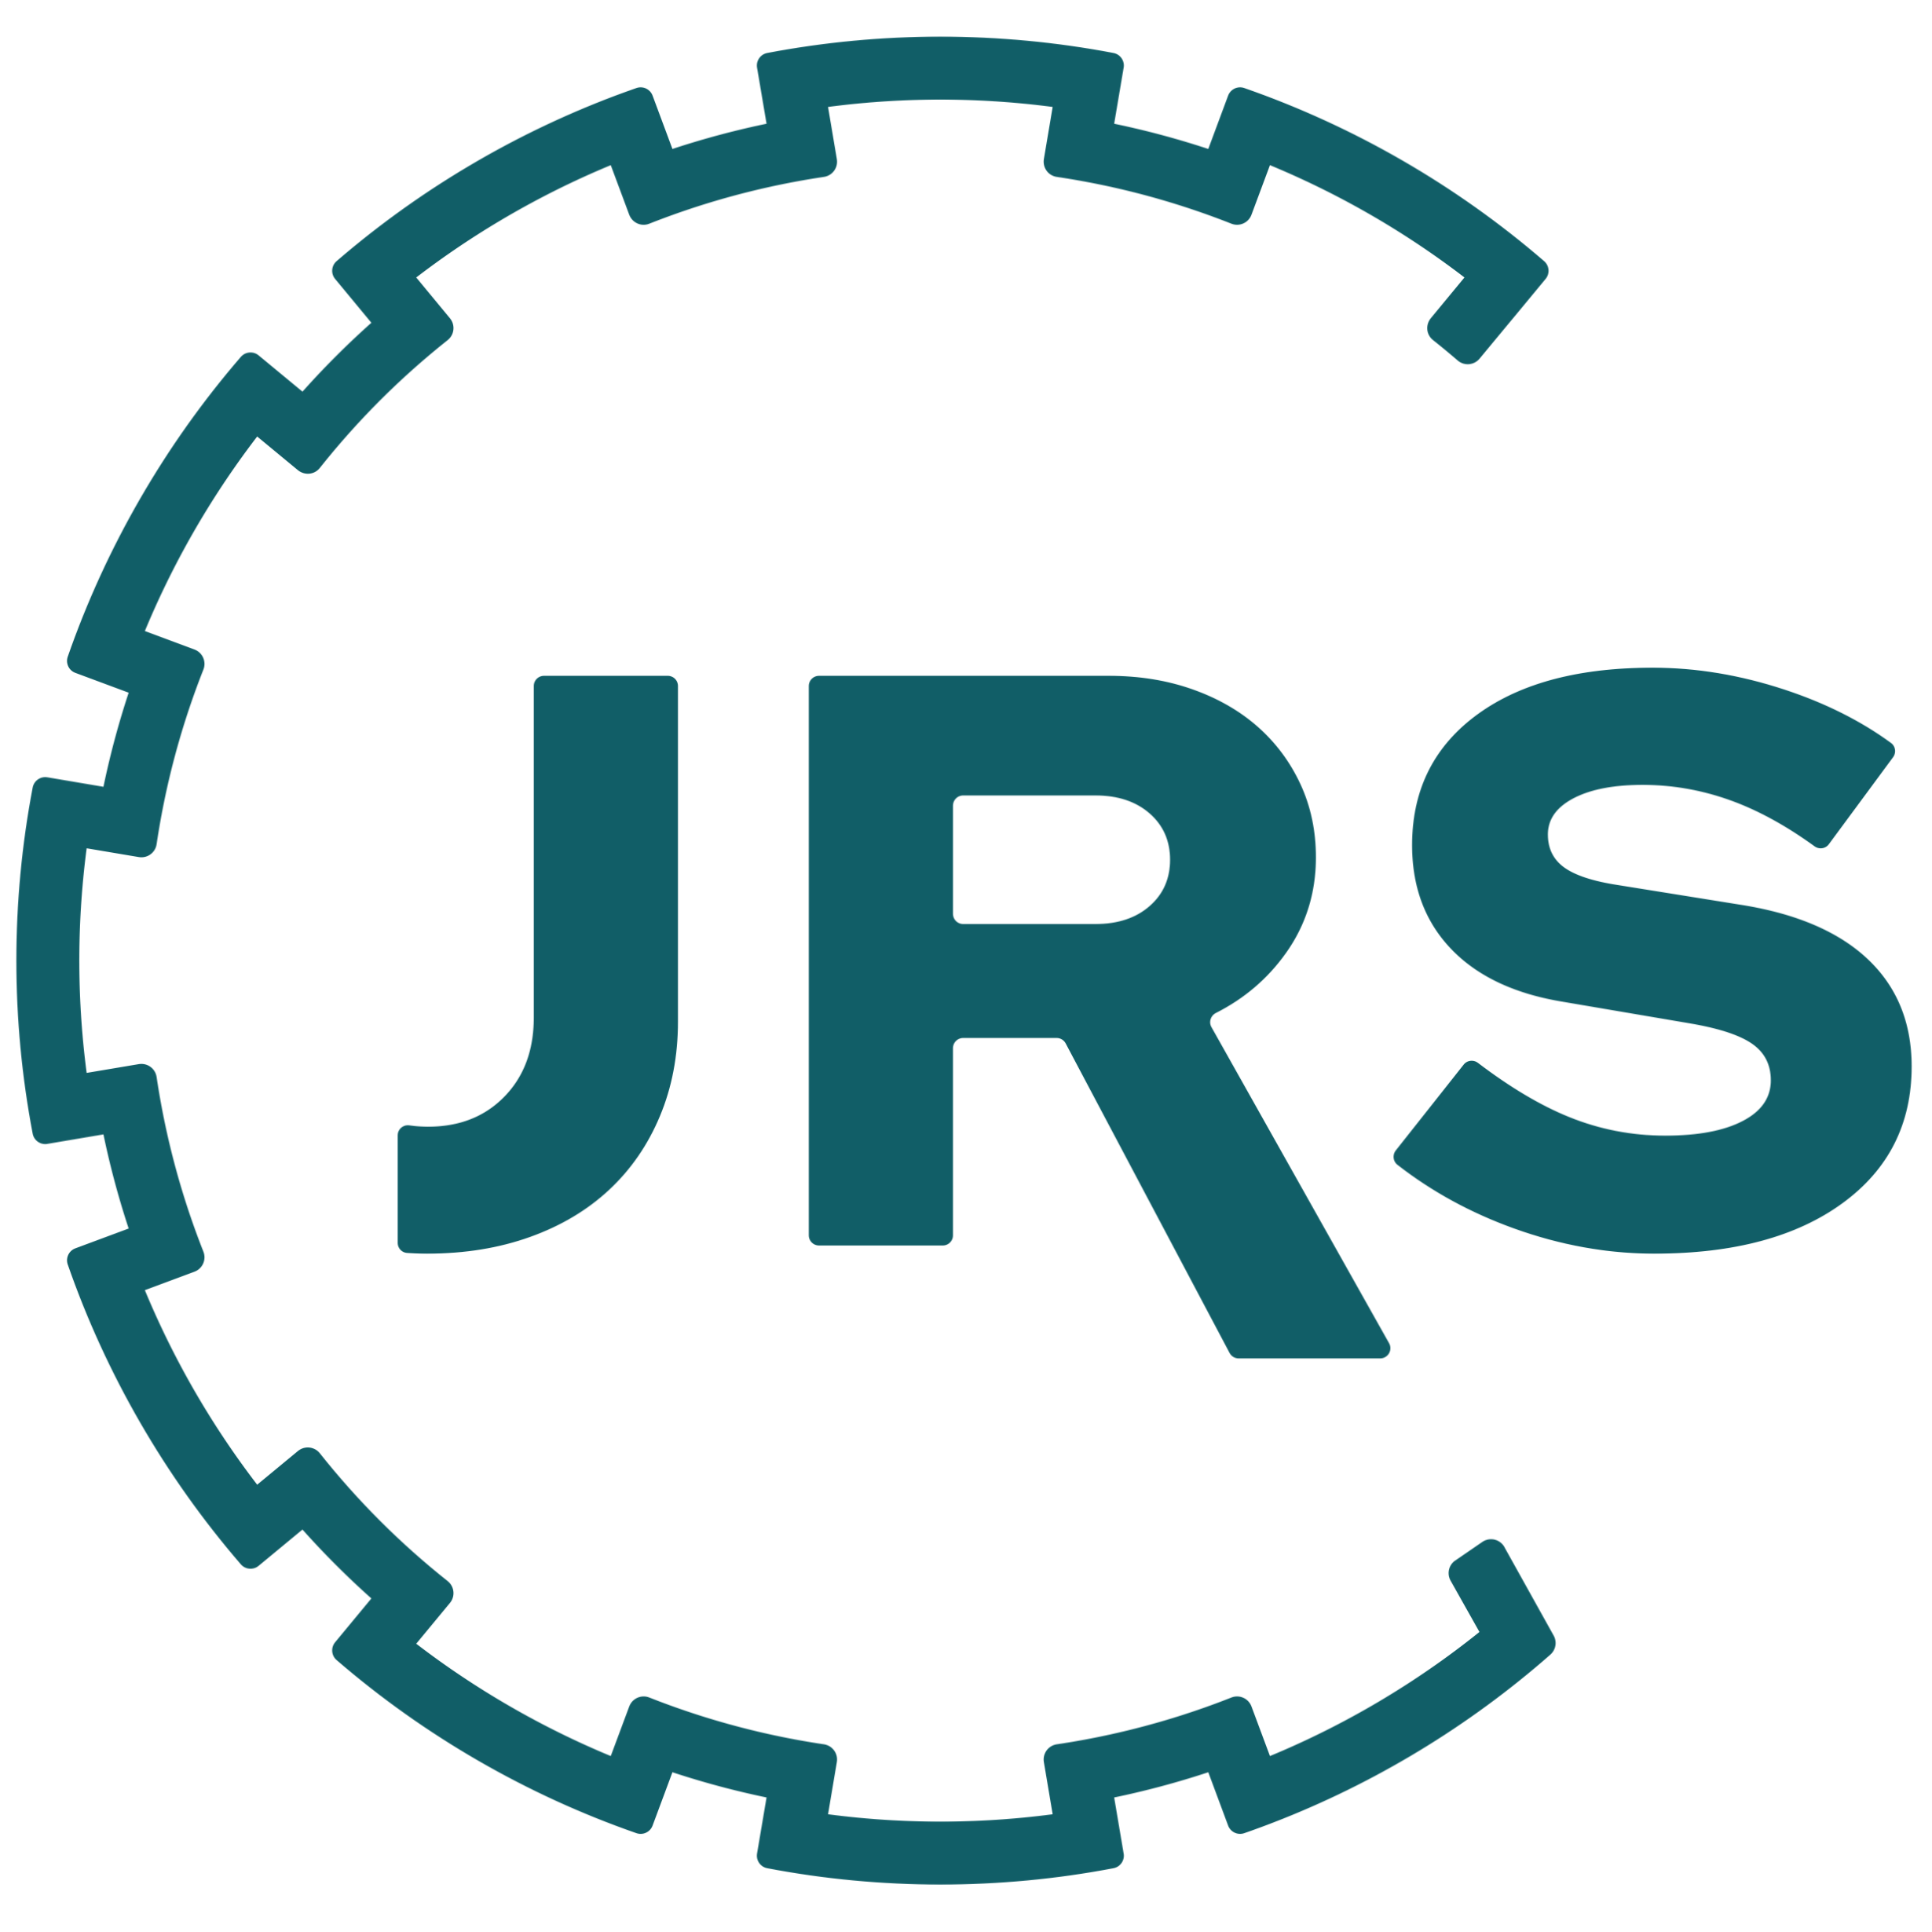 JRS - Fibers for Life